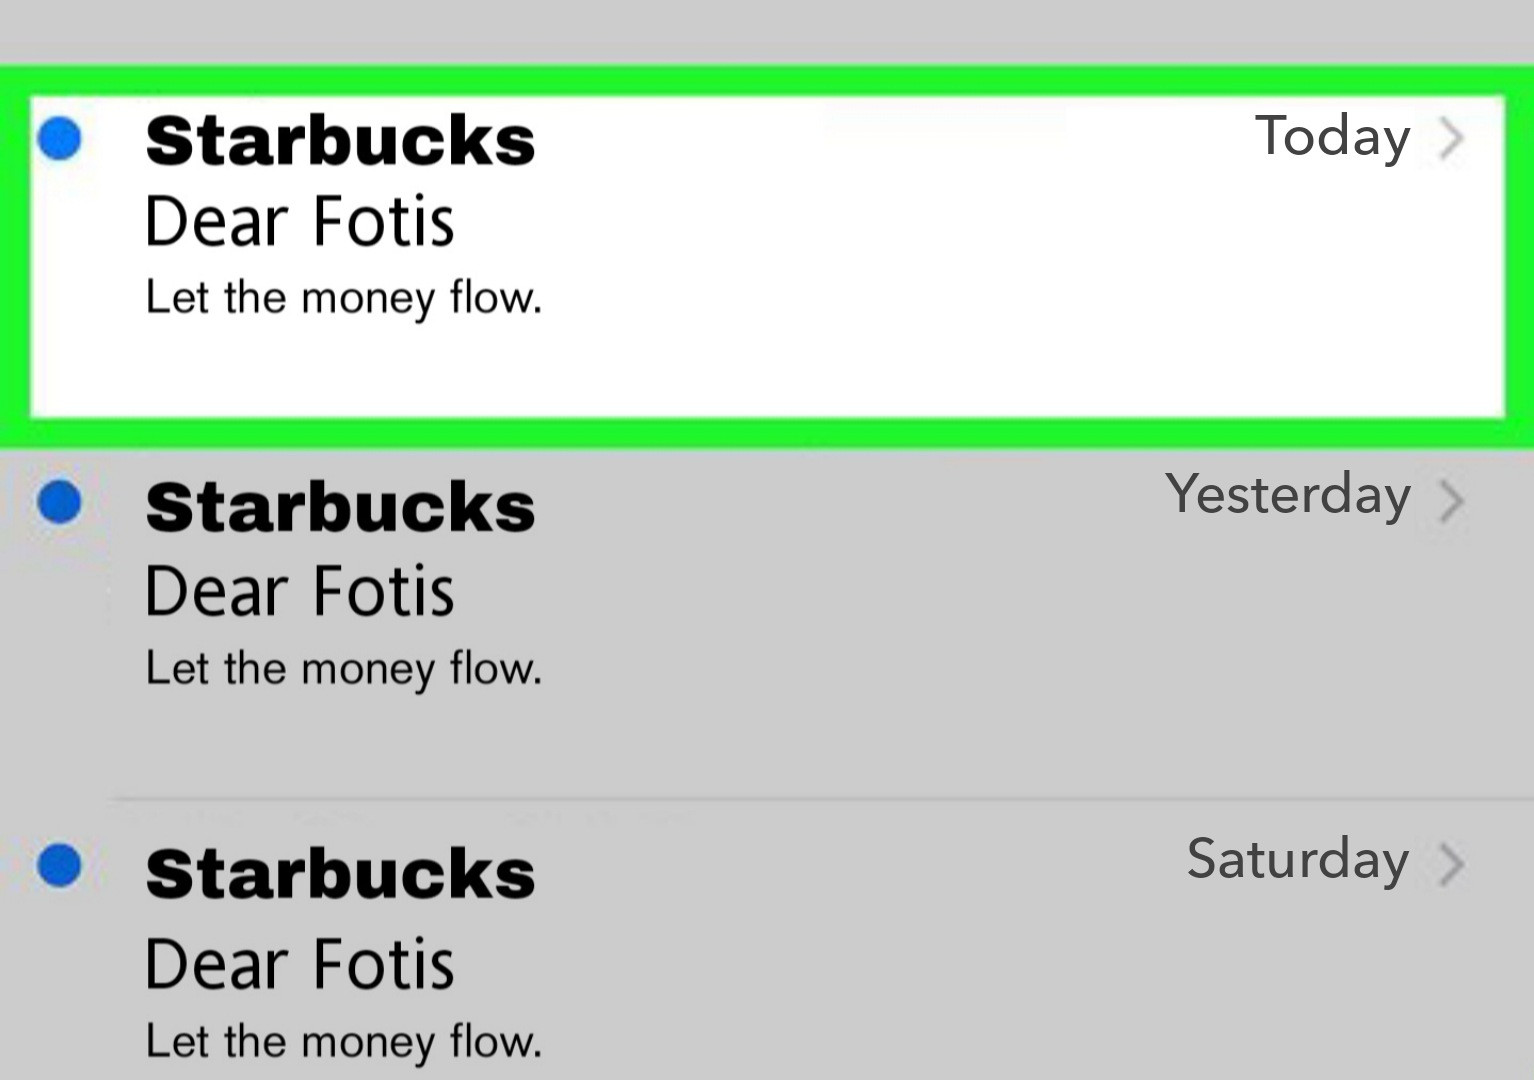 StarbucksSpam.jpg